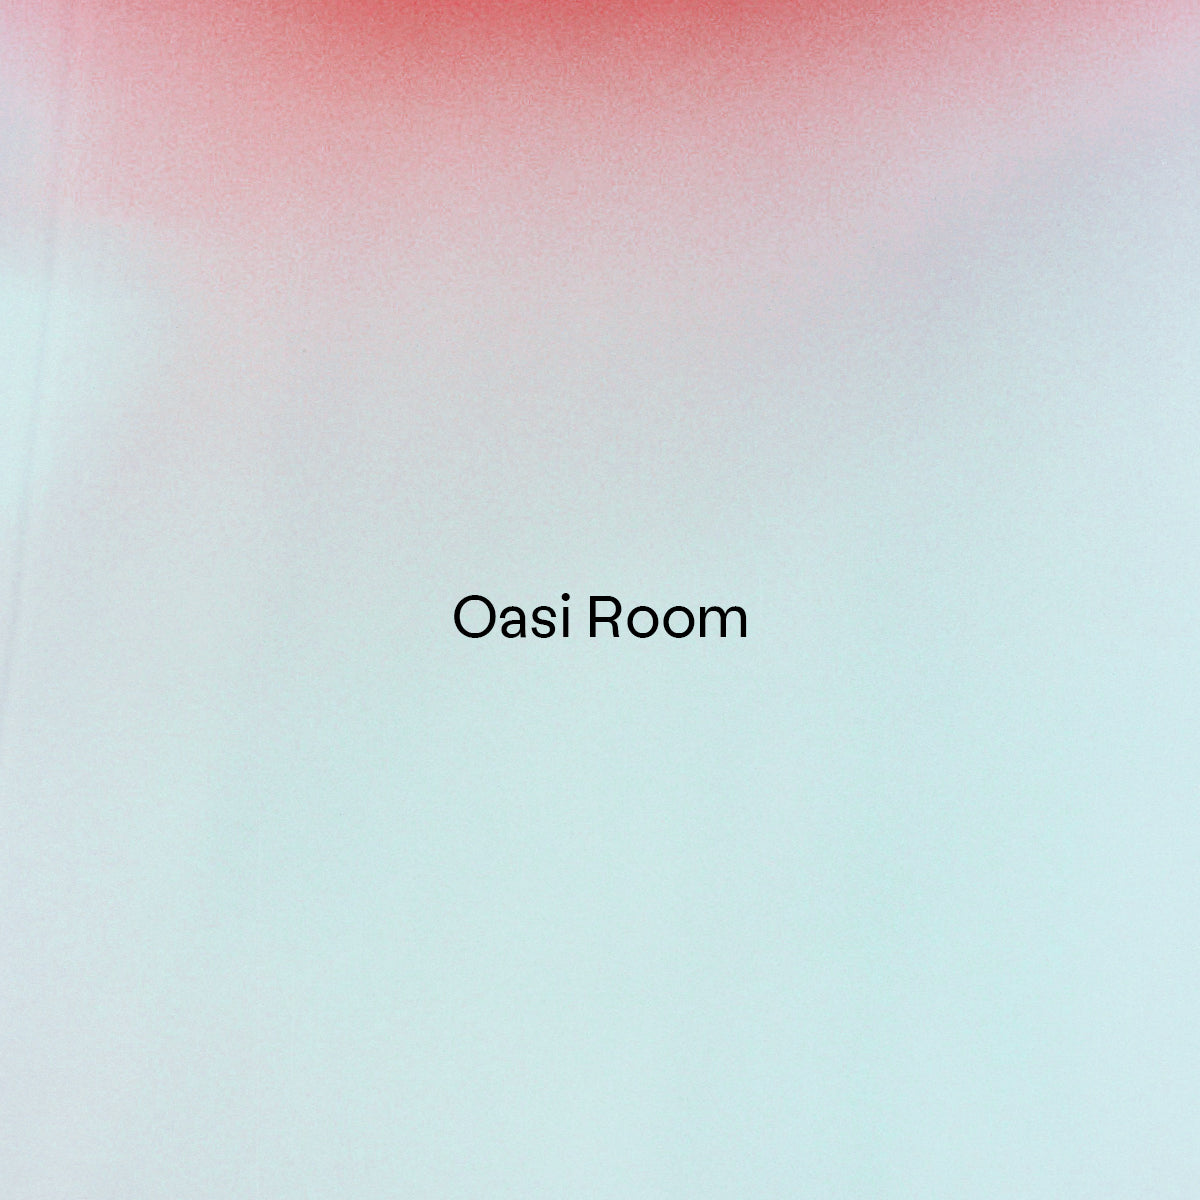 21 Maggio - Classi Oasi Room